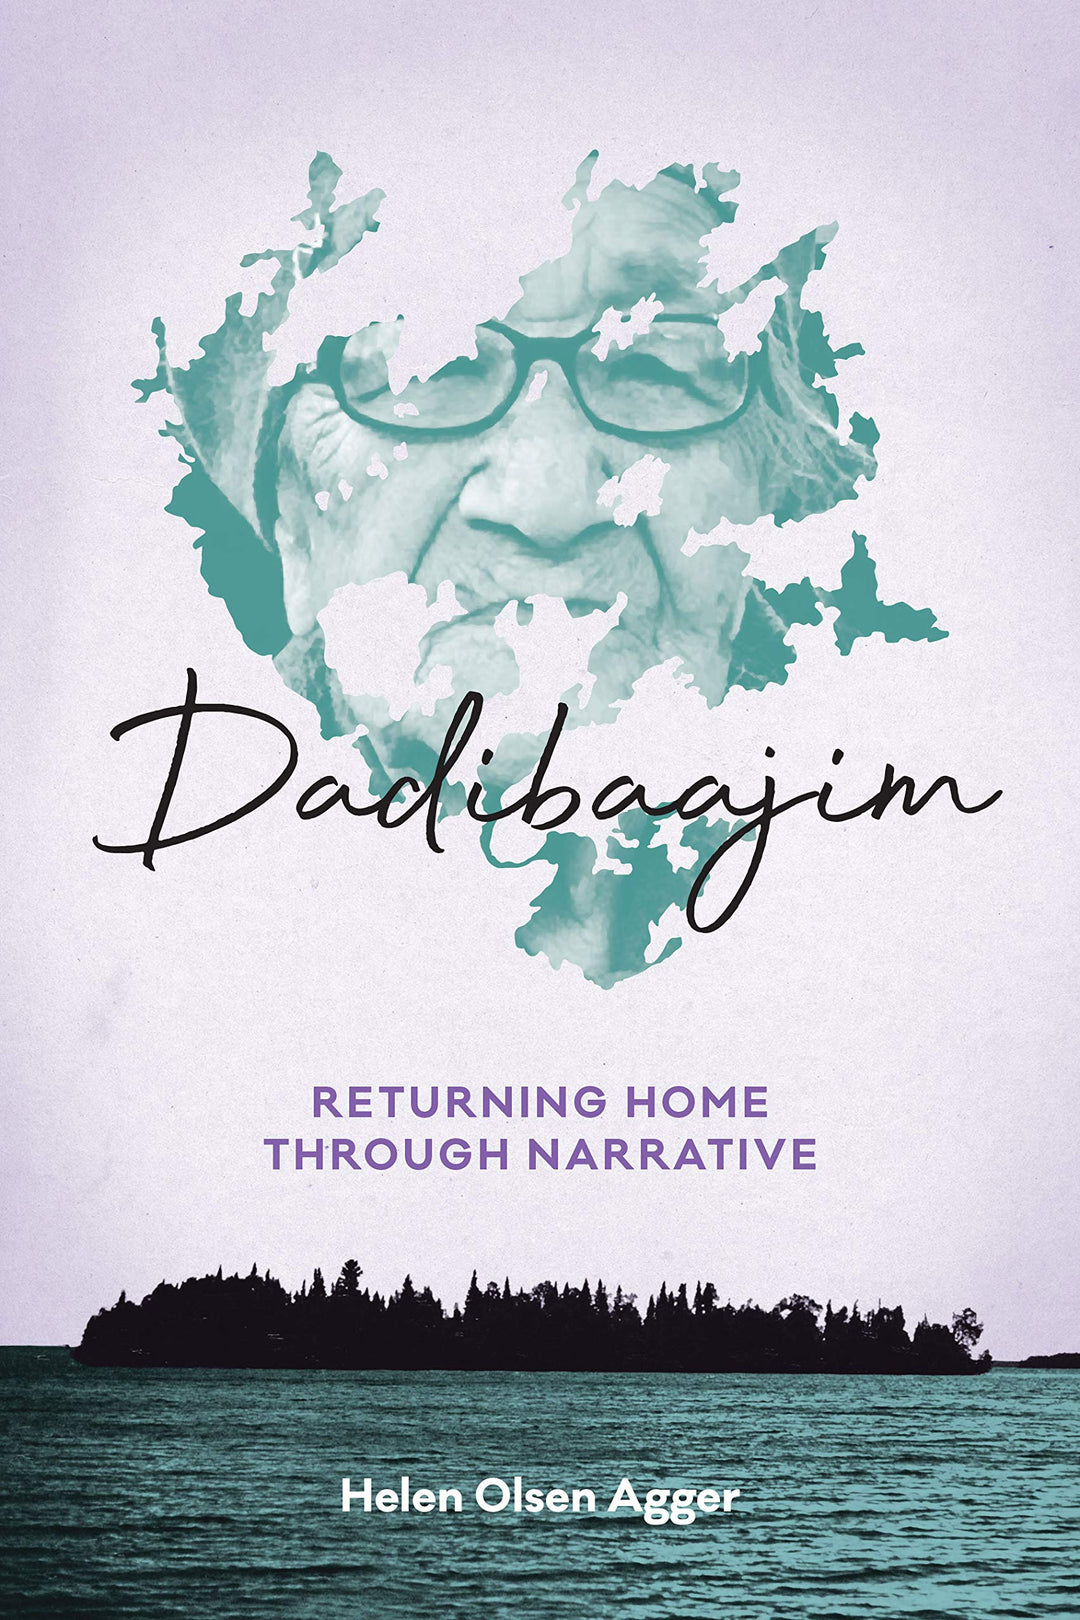 Dadibaajim: Returning Home Through Narrative by Helen Olsen Agger